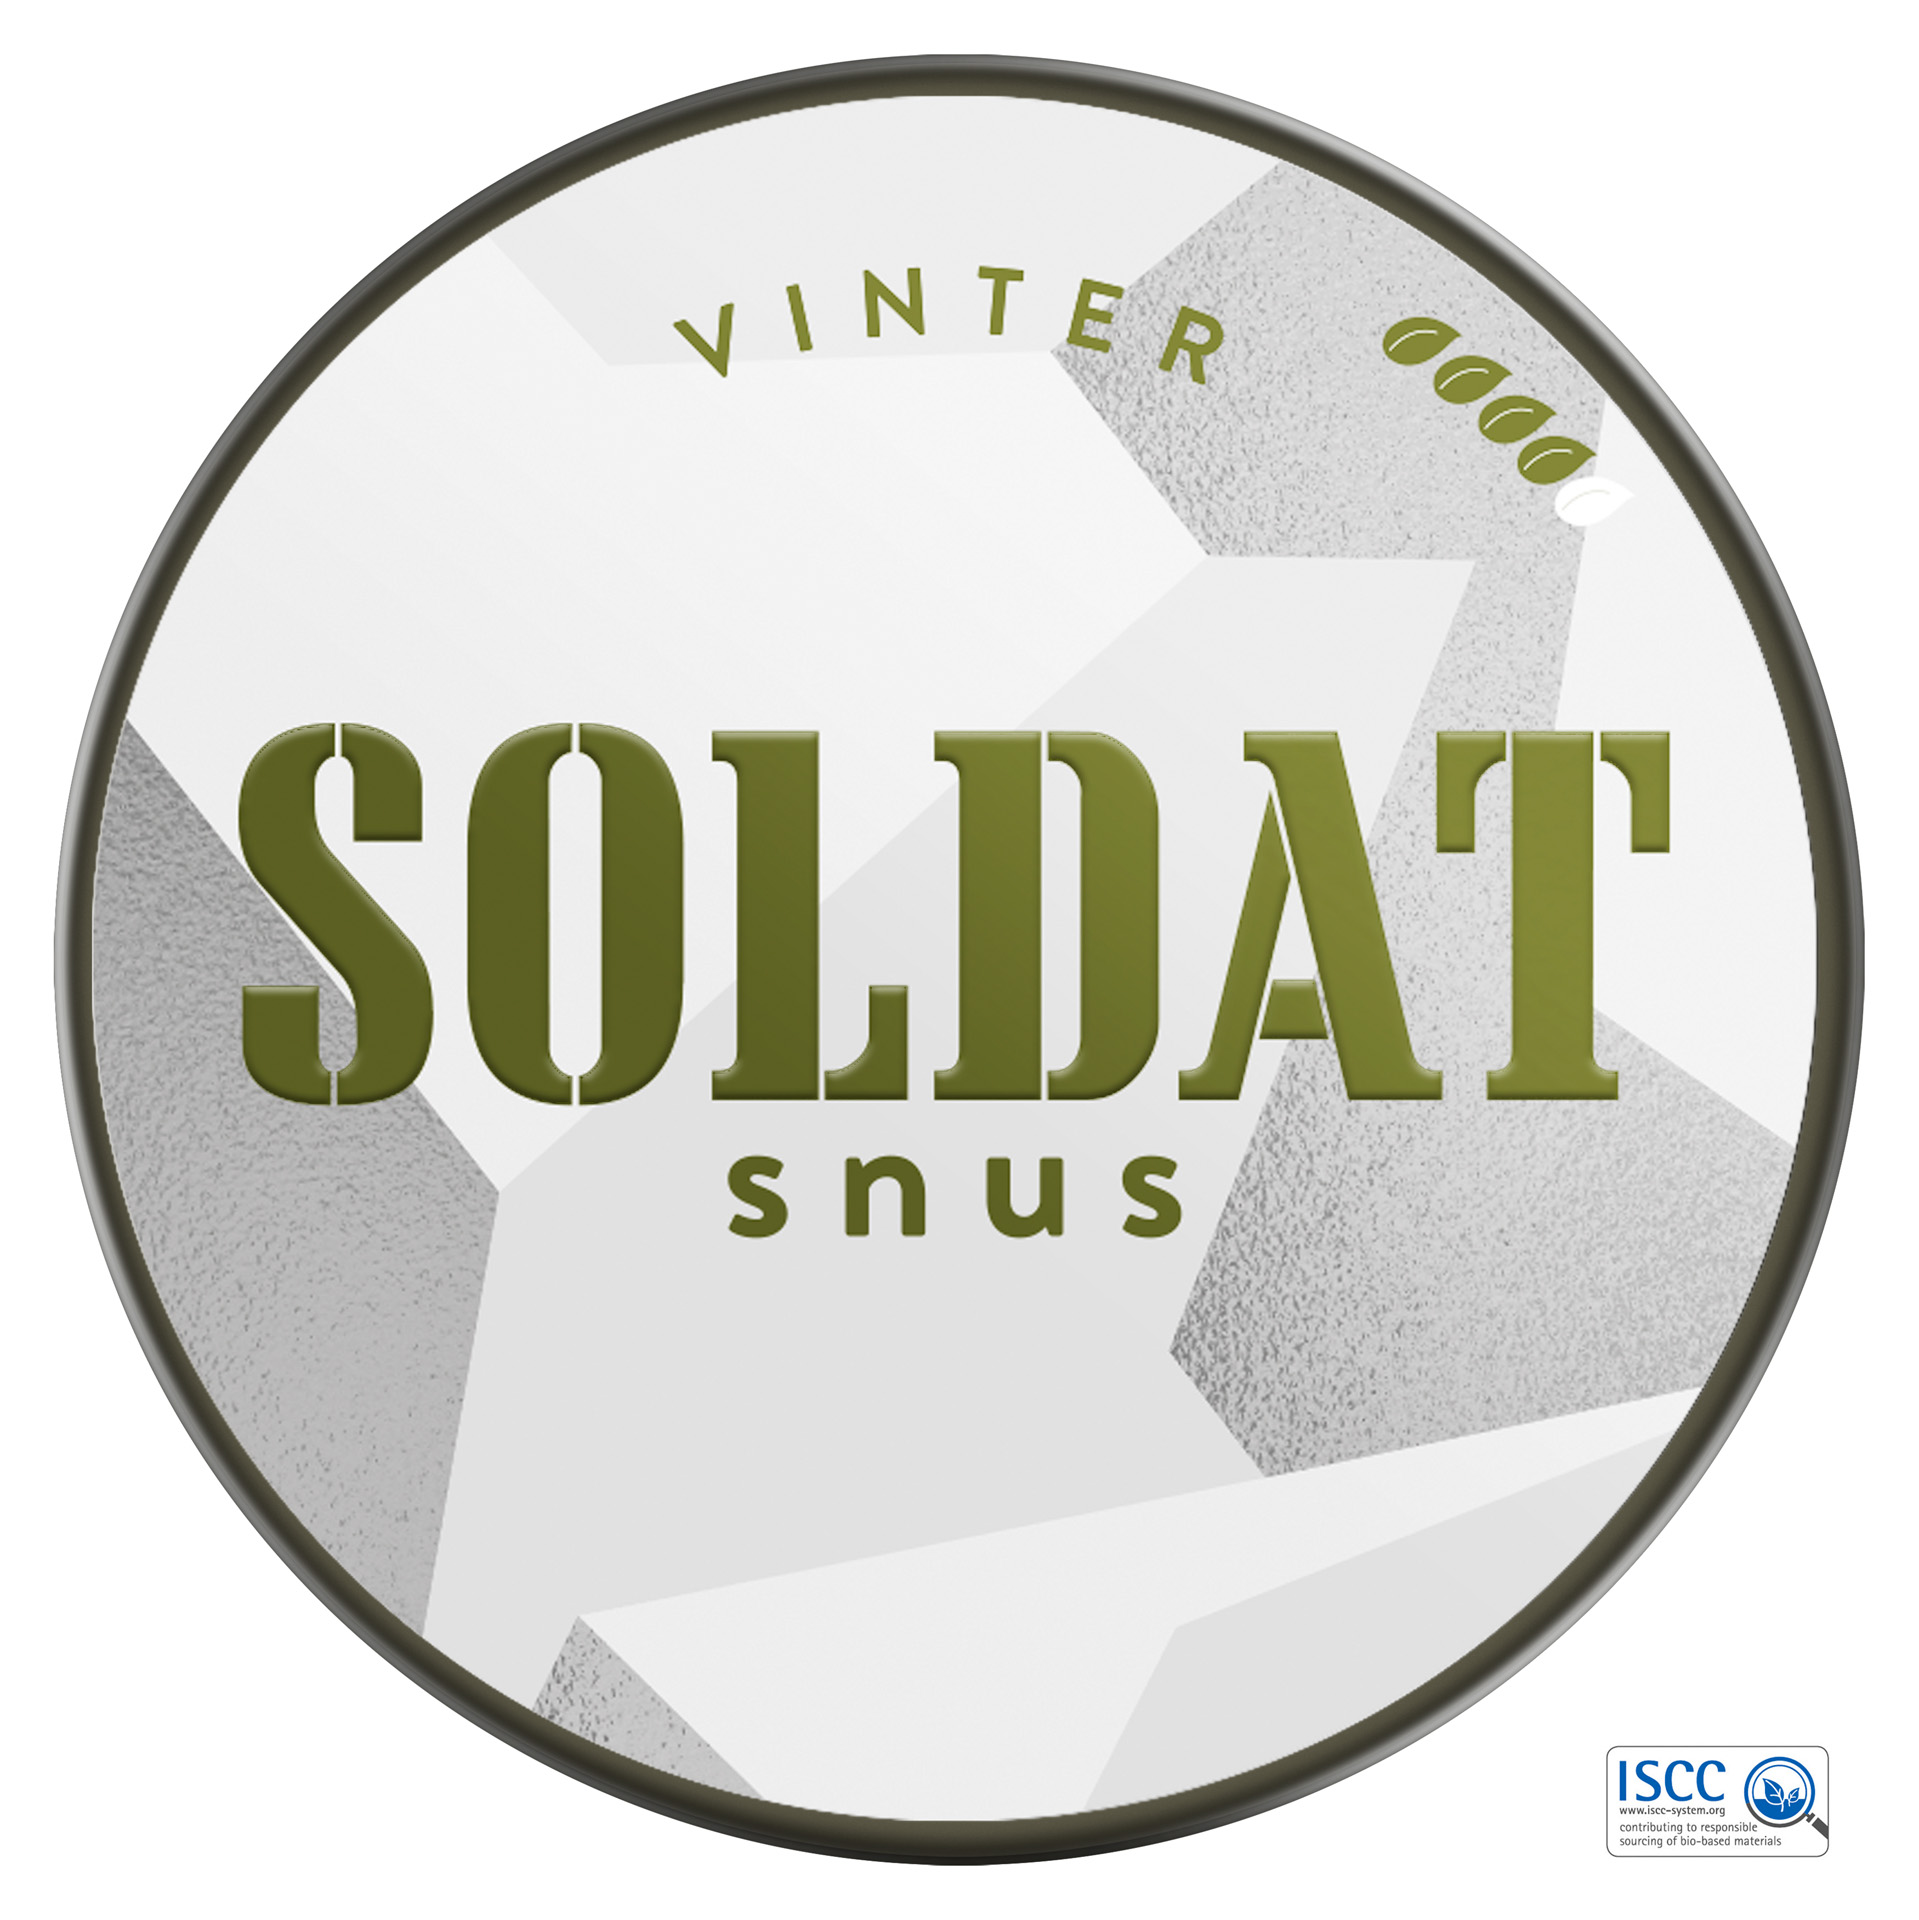 Kurbitssnus_Soldat Vinter